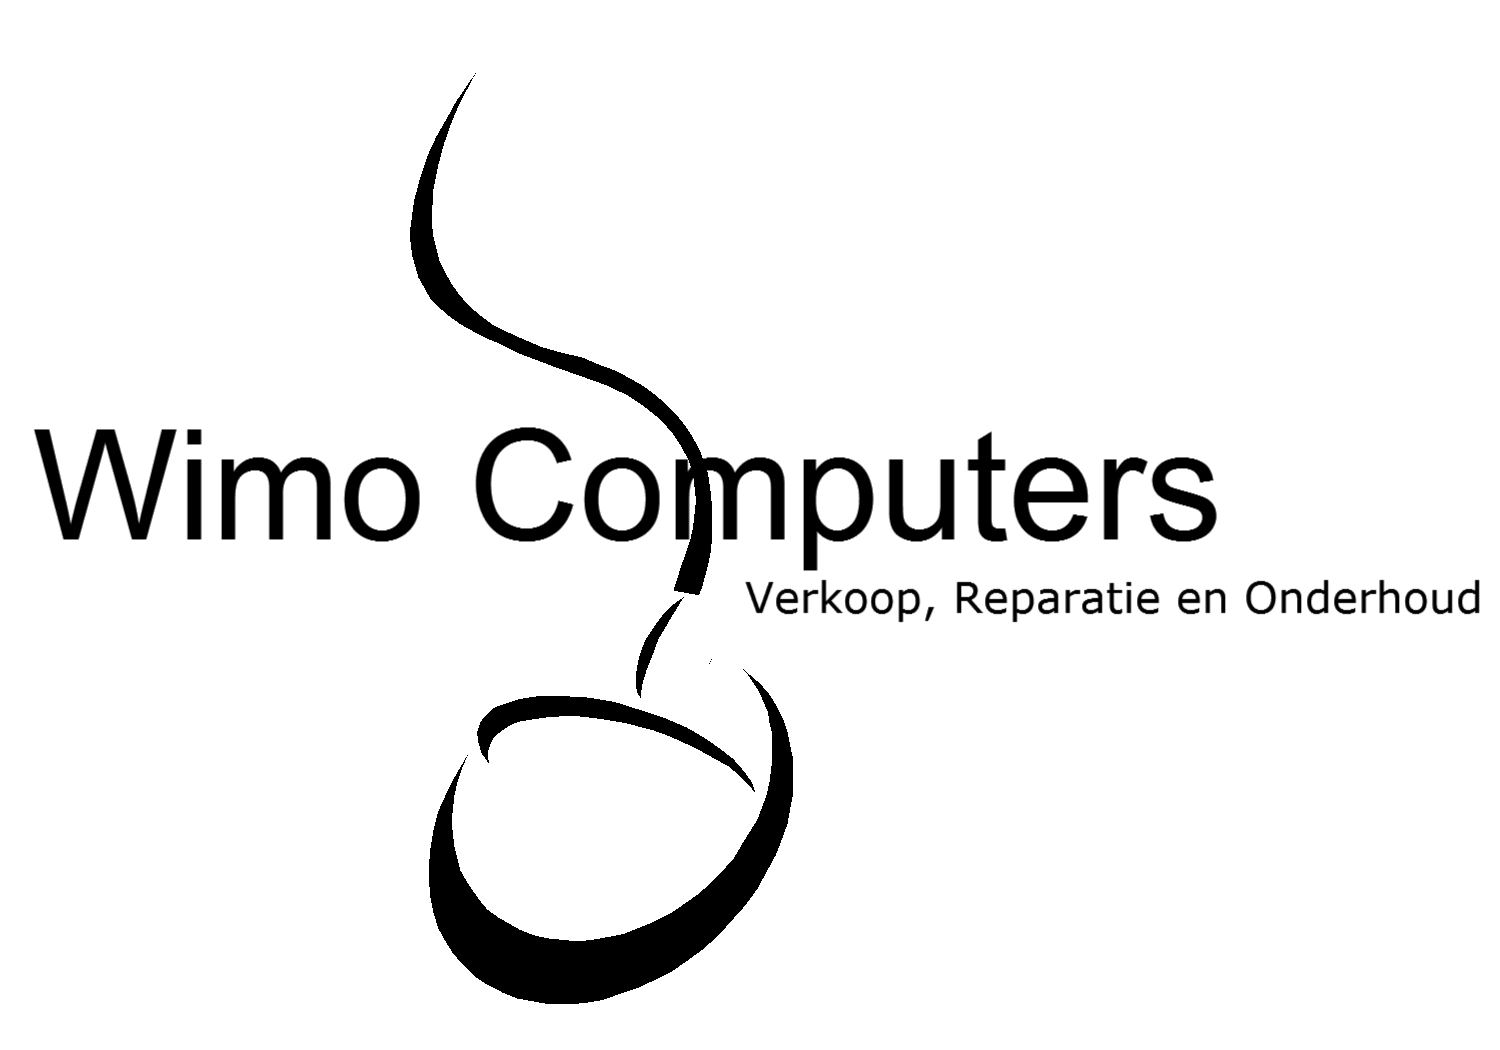 Wimo Computers